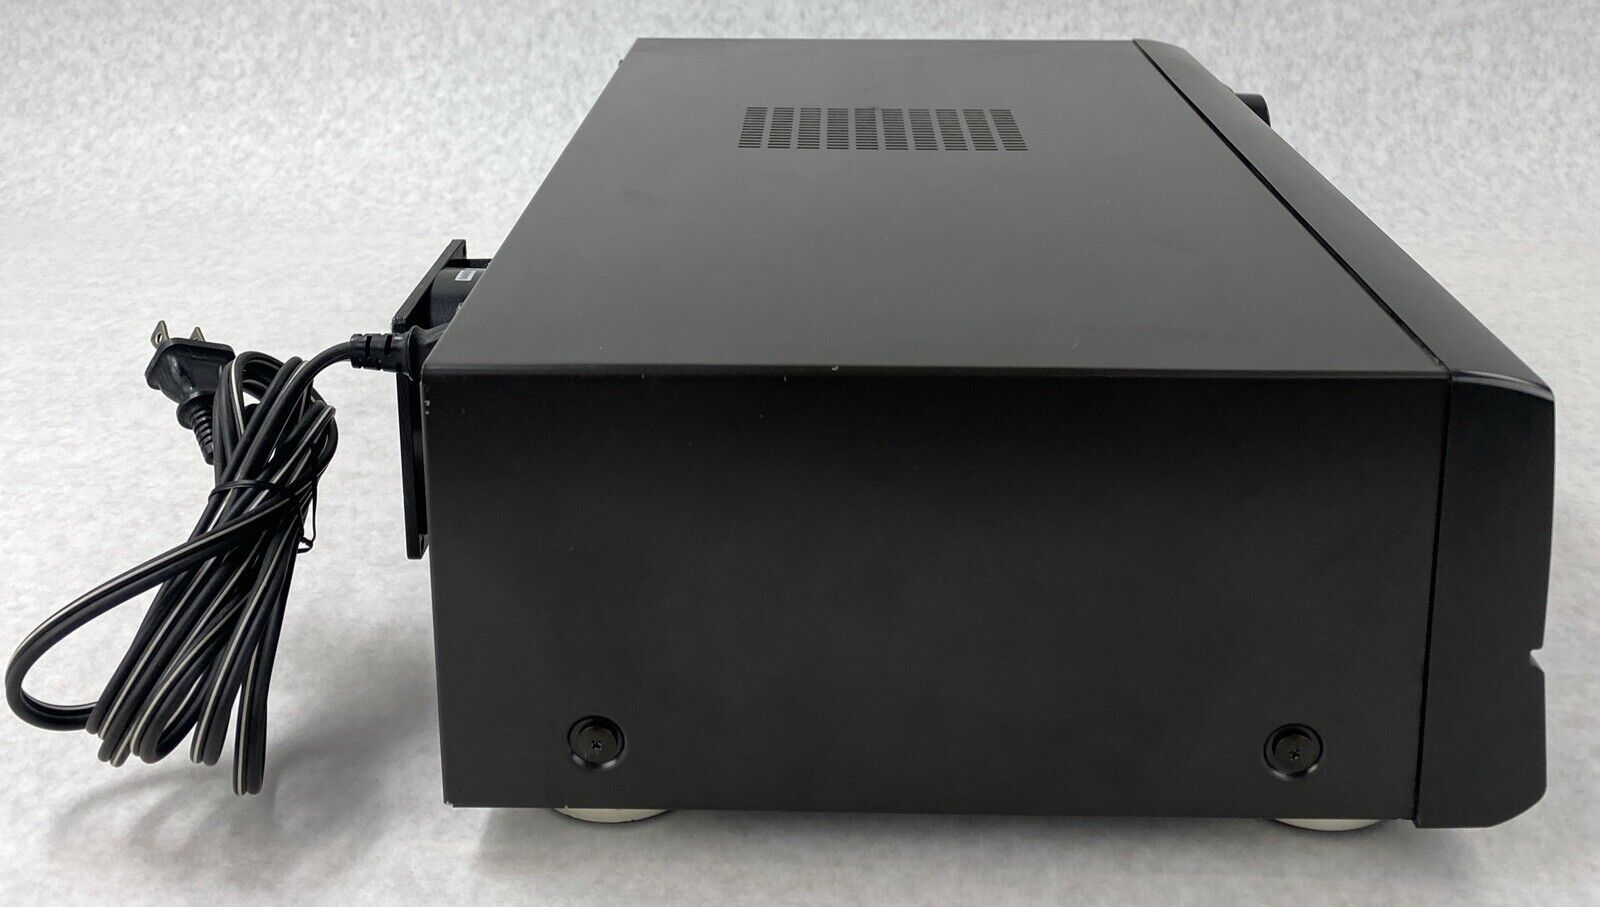 Technics SA-AX540 AV Control Stereo Receiver 5.1 Channel Tested NO REMOTE